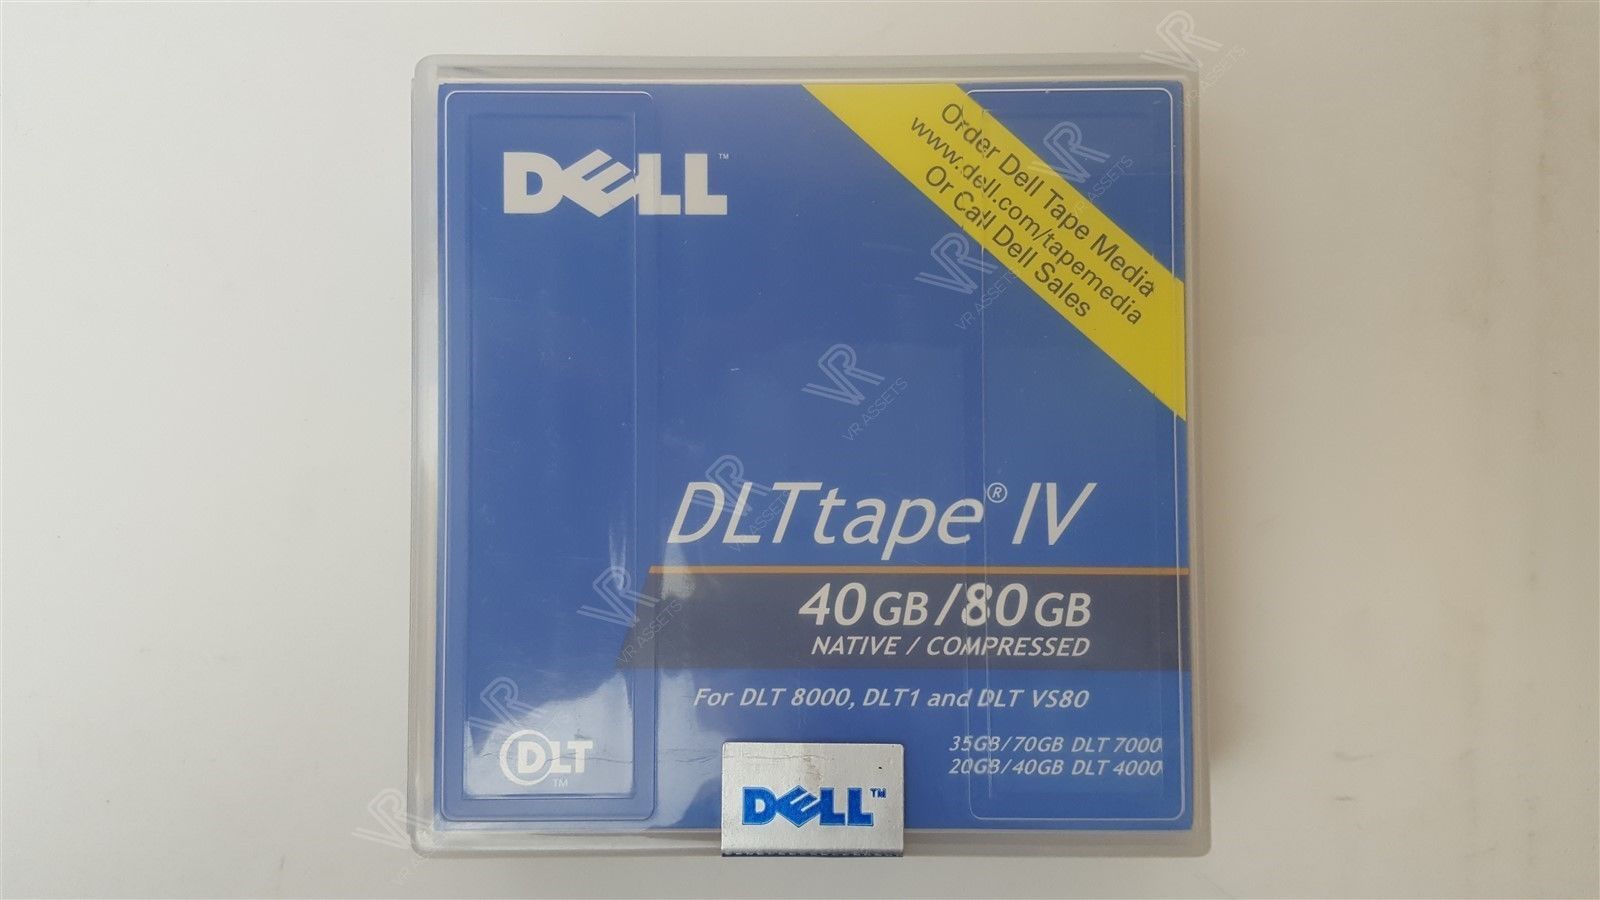 Dell DLTtape IV DLT 8000, DLT1 DLT VS80 Tape Data Cartridge 40Gb/80Gb 9W080